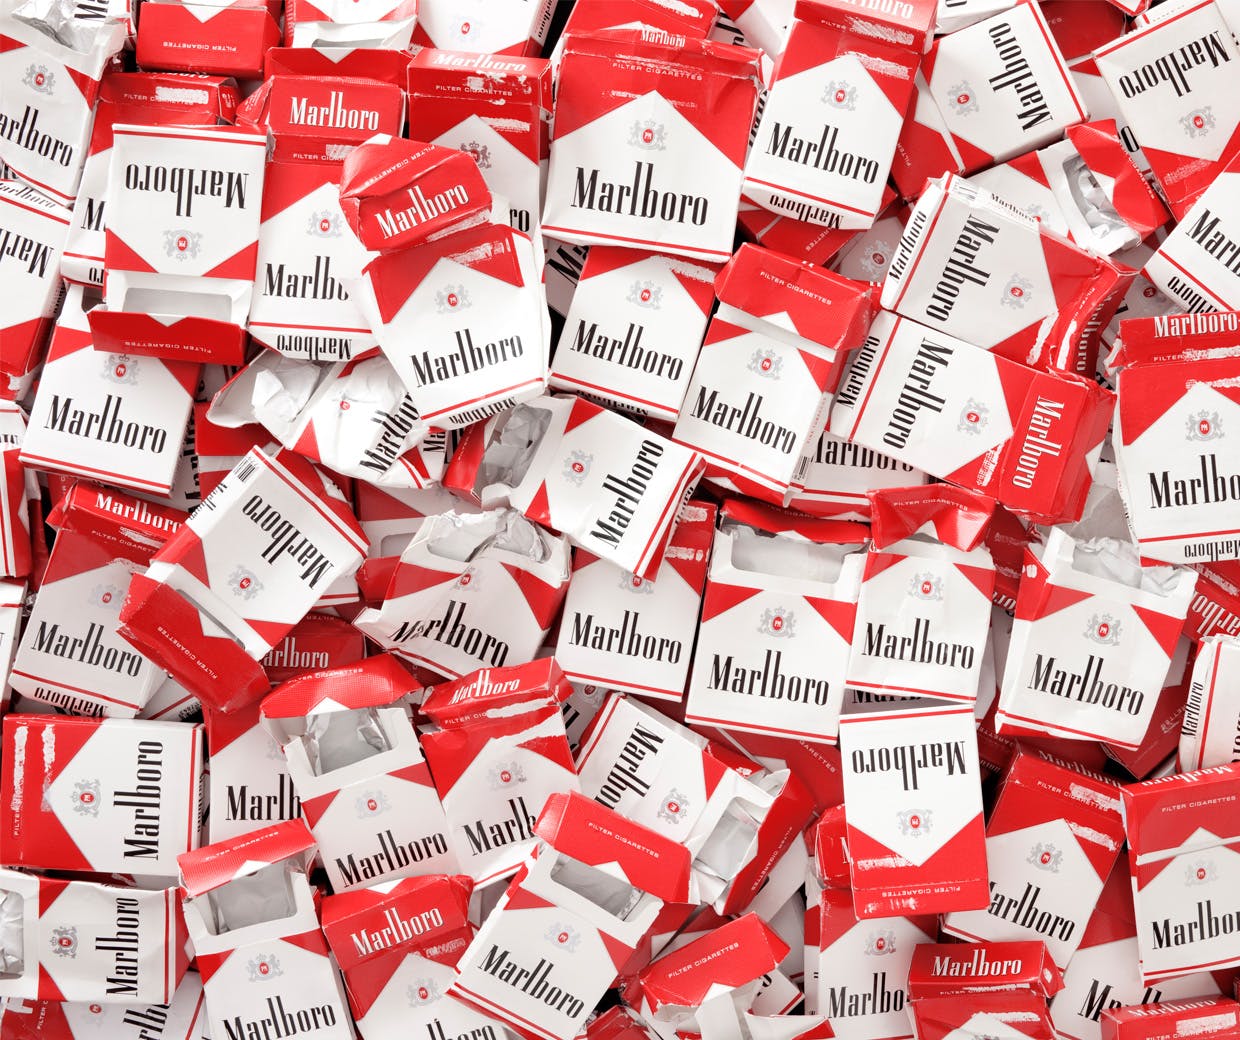 Marlboro offering ex-smokers cheap life insurance leaves a bad taste – Marketing Week